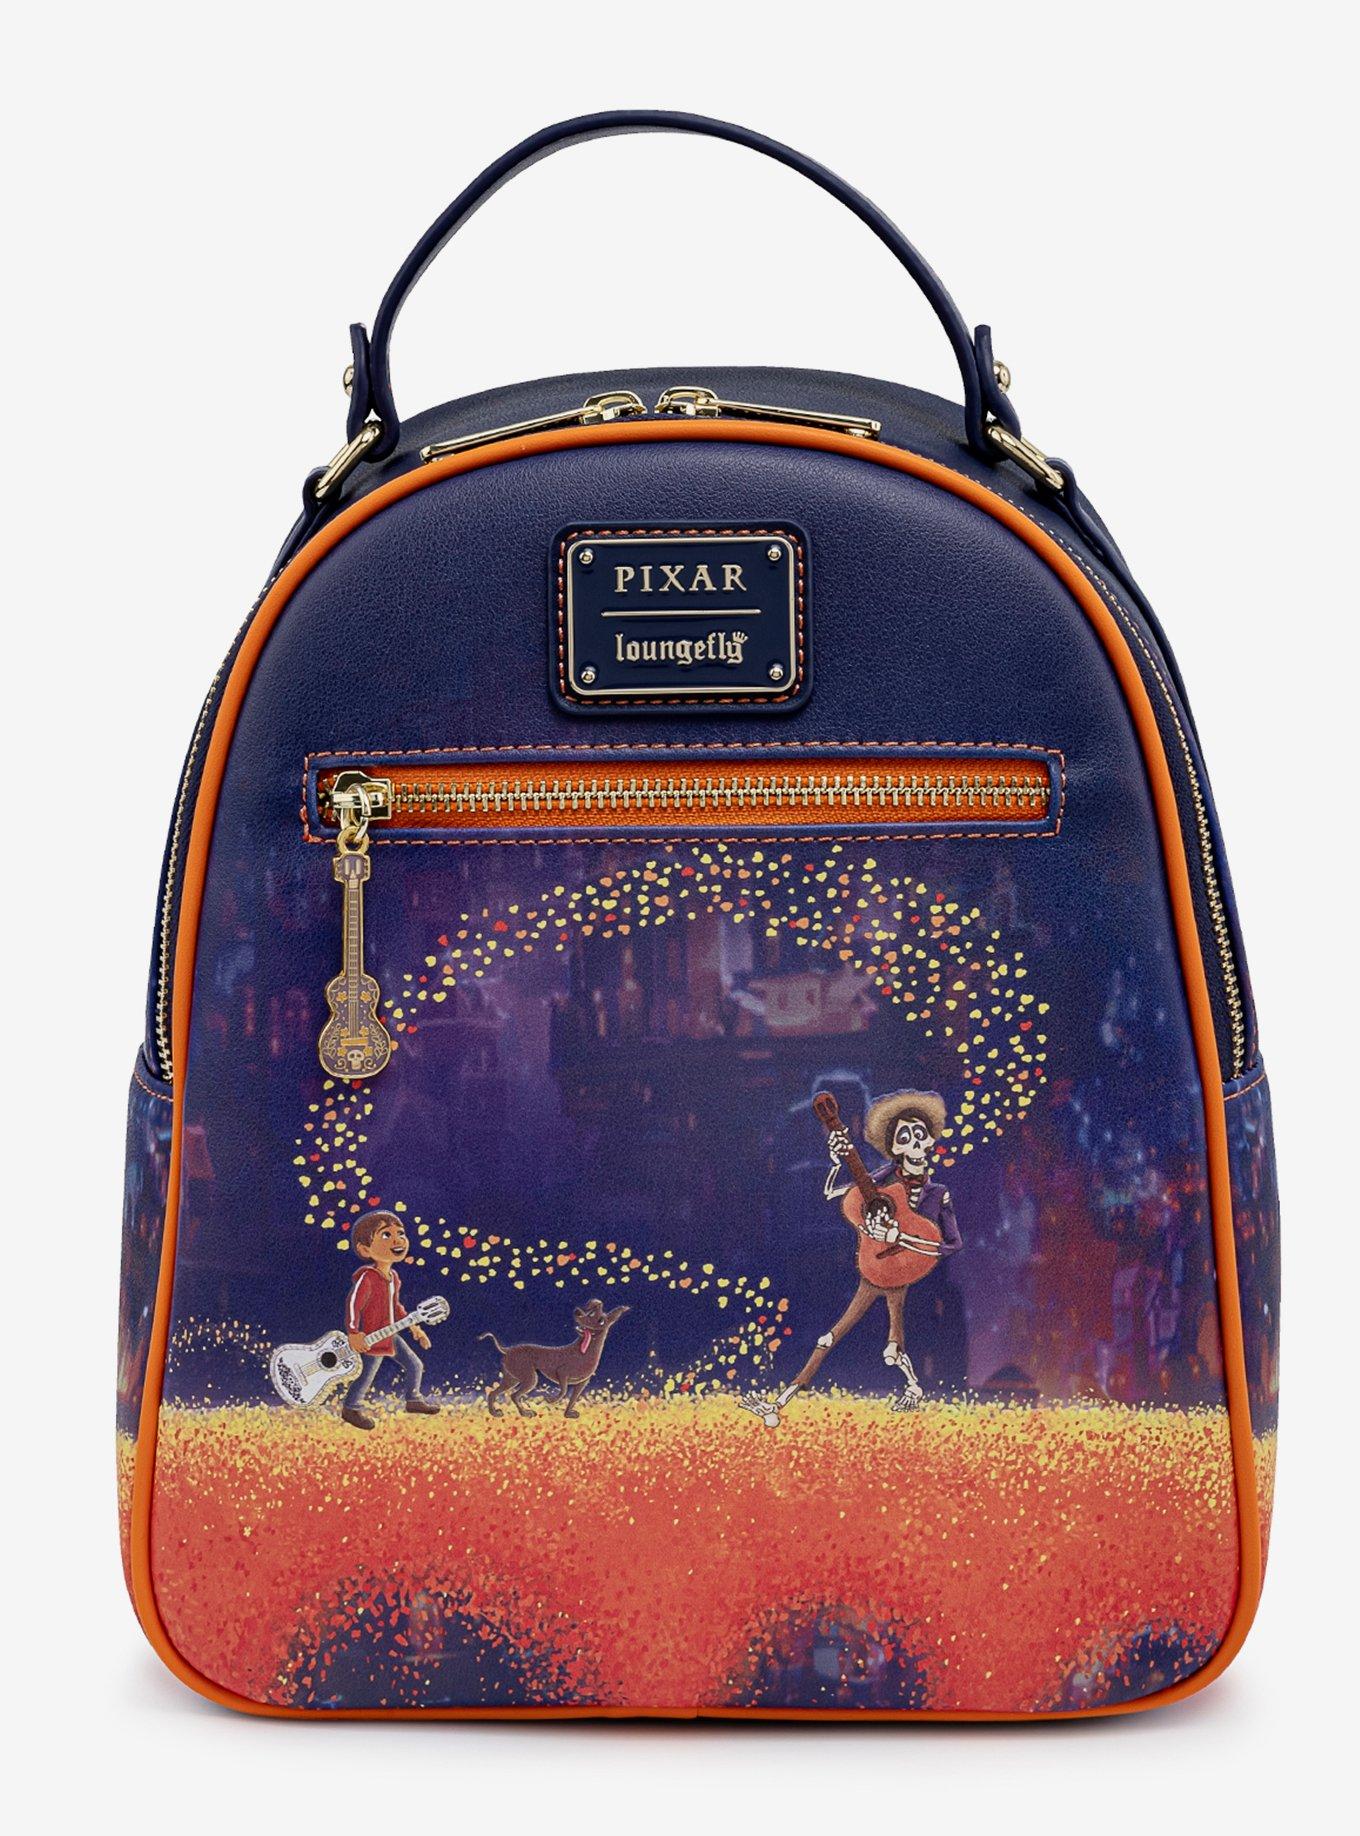 Loungefly Disney Pixar Coco Marigold Allover Print Handbag - BoxLunch Exclusive